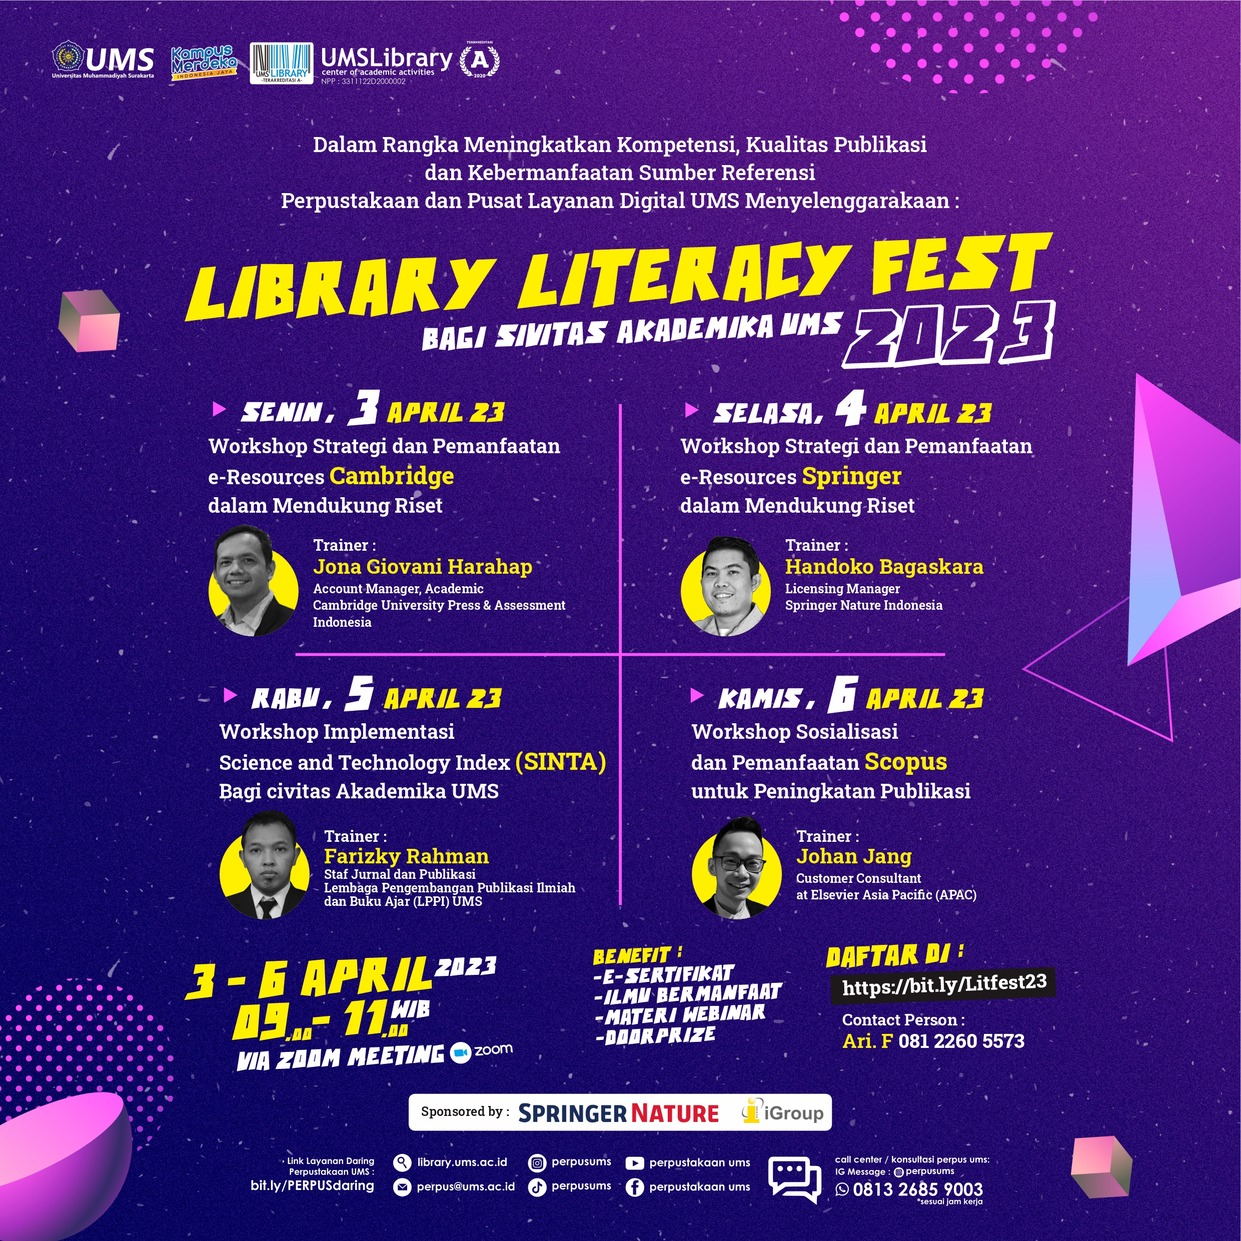 Library Literacy Fest 2023 bagi sivitas akademika UMS